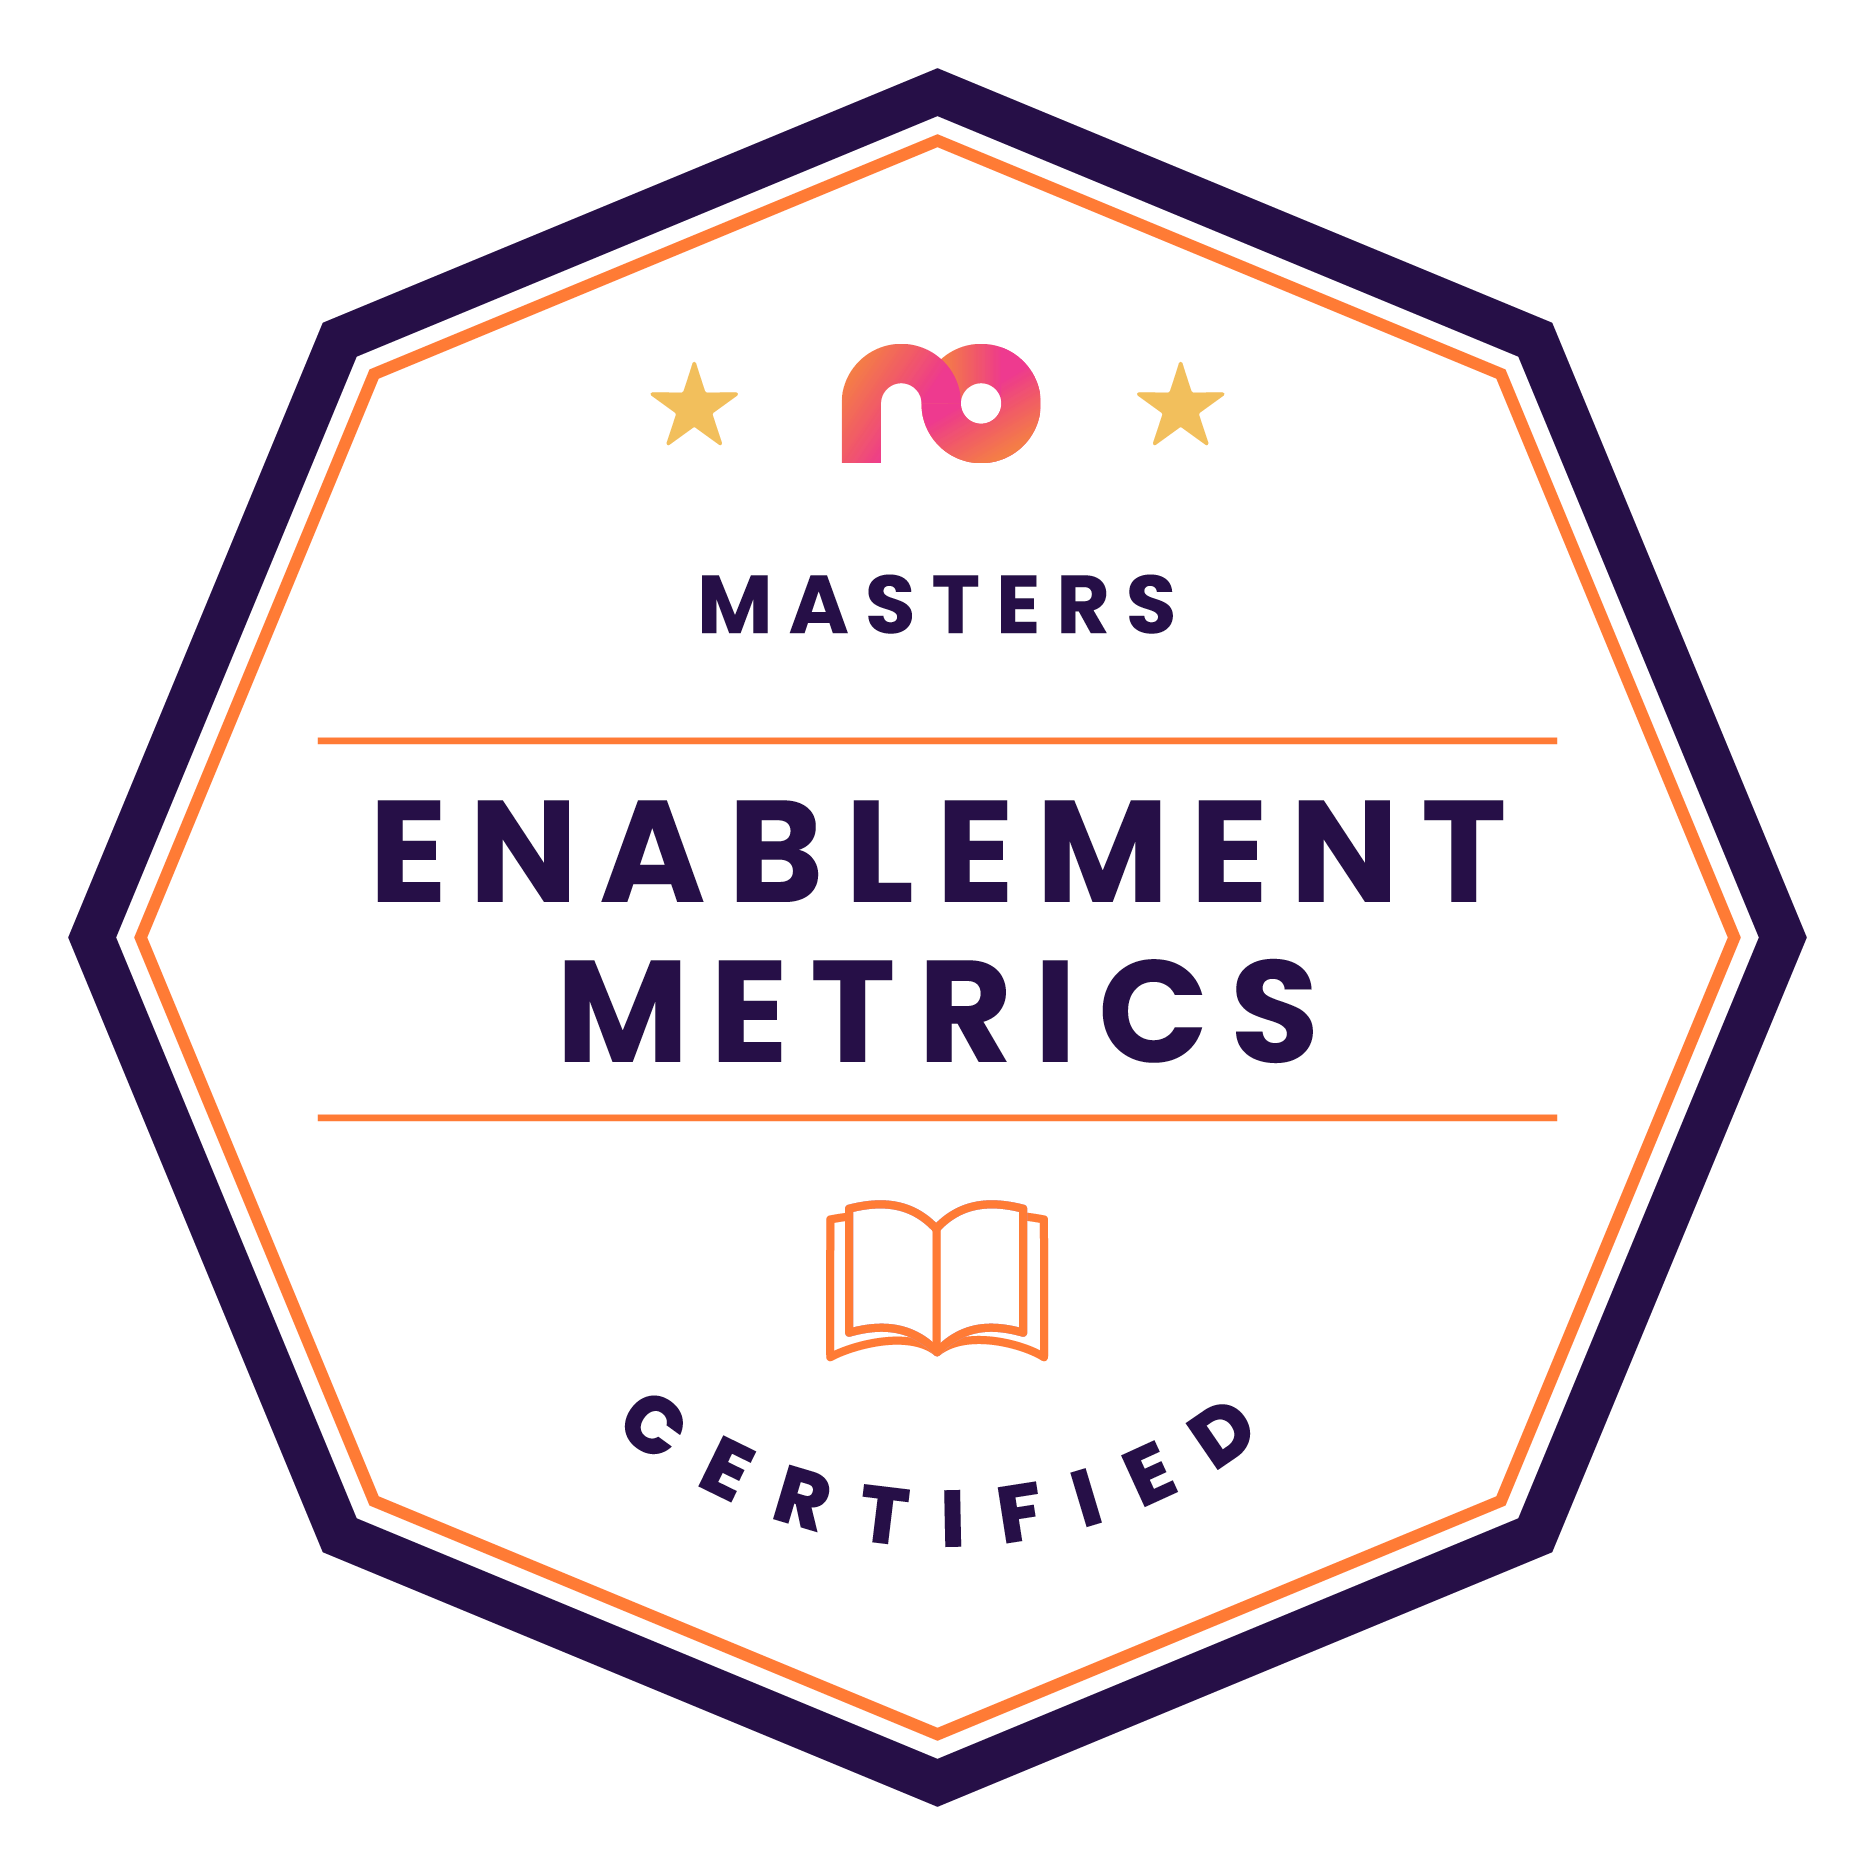 Enablement Metrics Certified | Masters badge